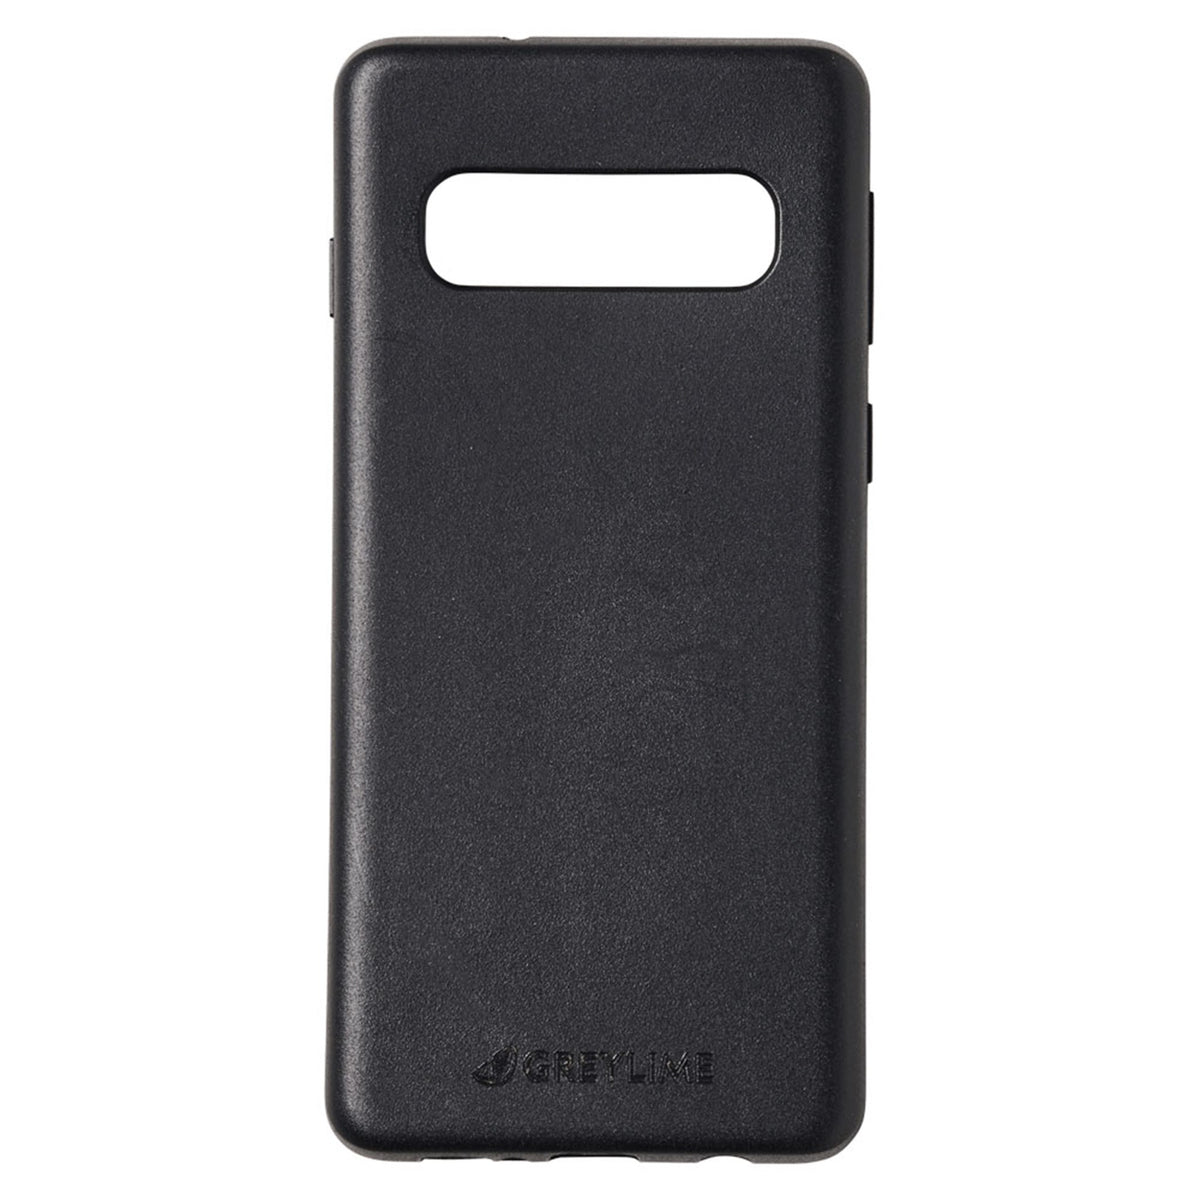 GreyLime-Samsung-Galaxy-S10-Plus-biodegradable-cover-Black-COSAM10P01-V4.jpg